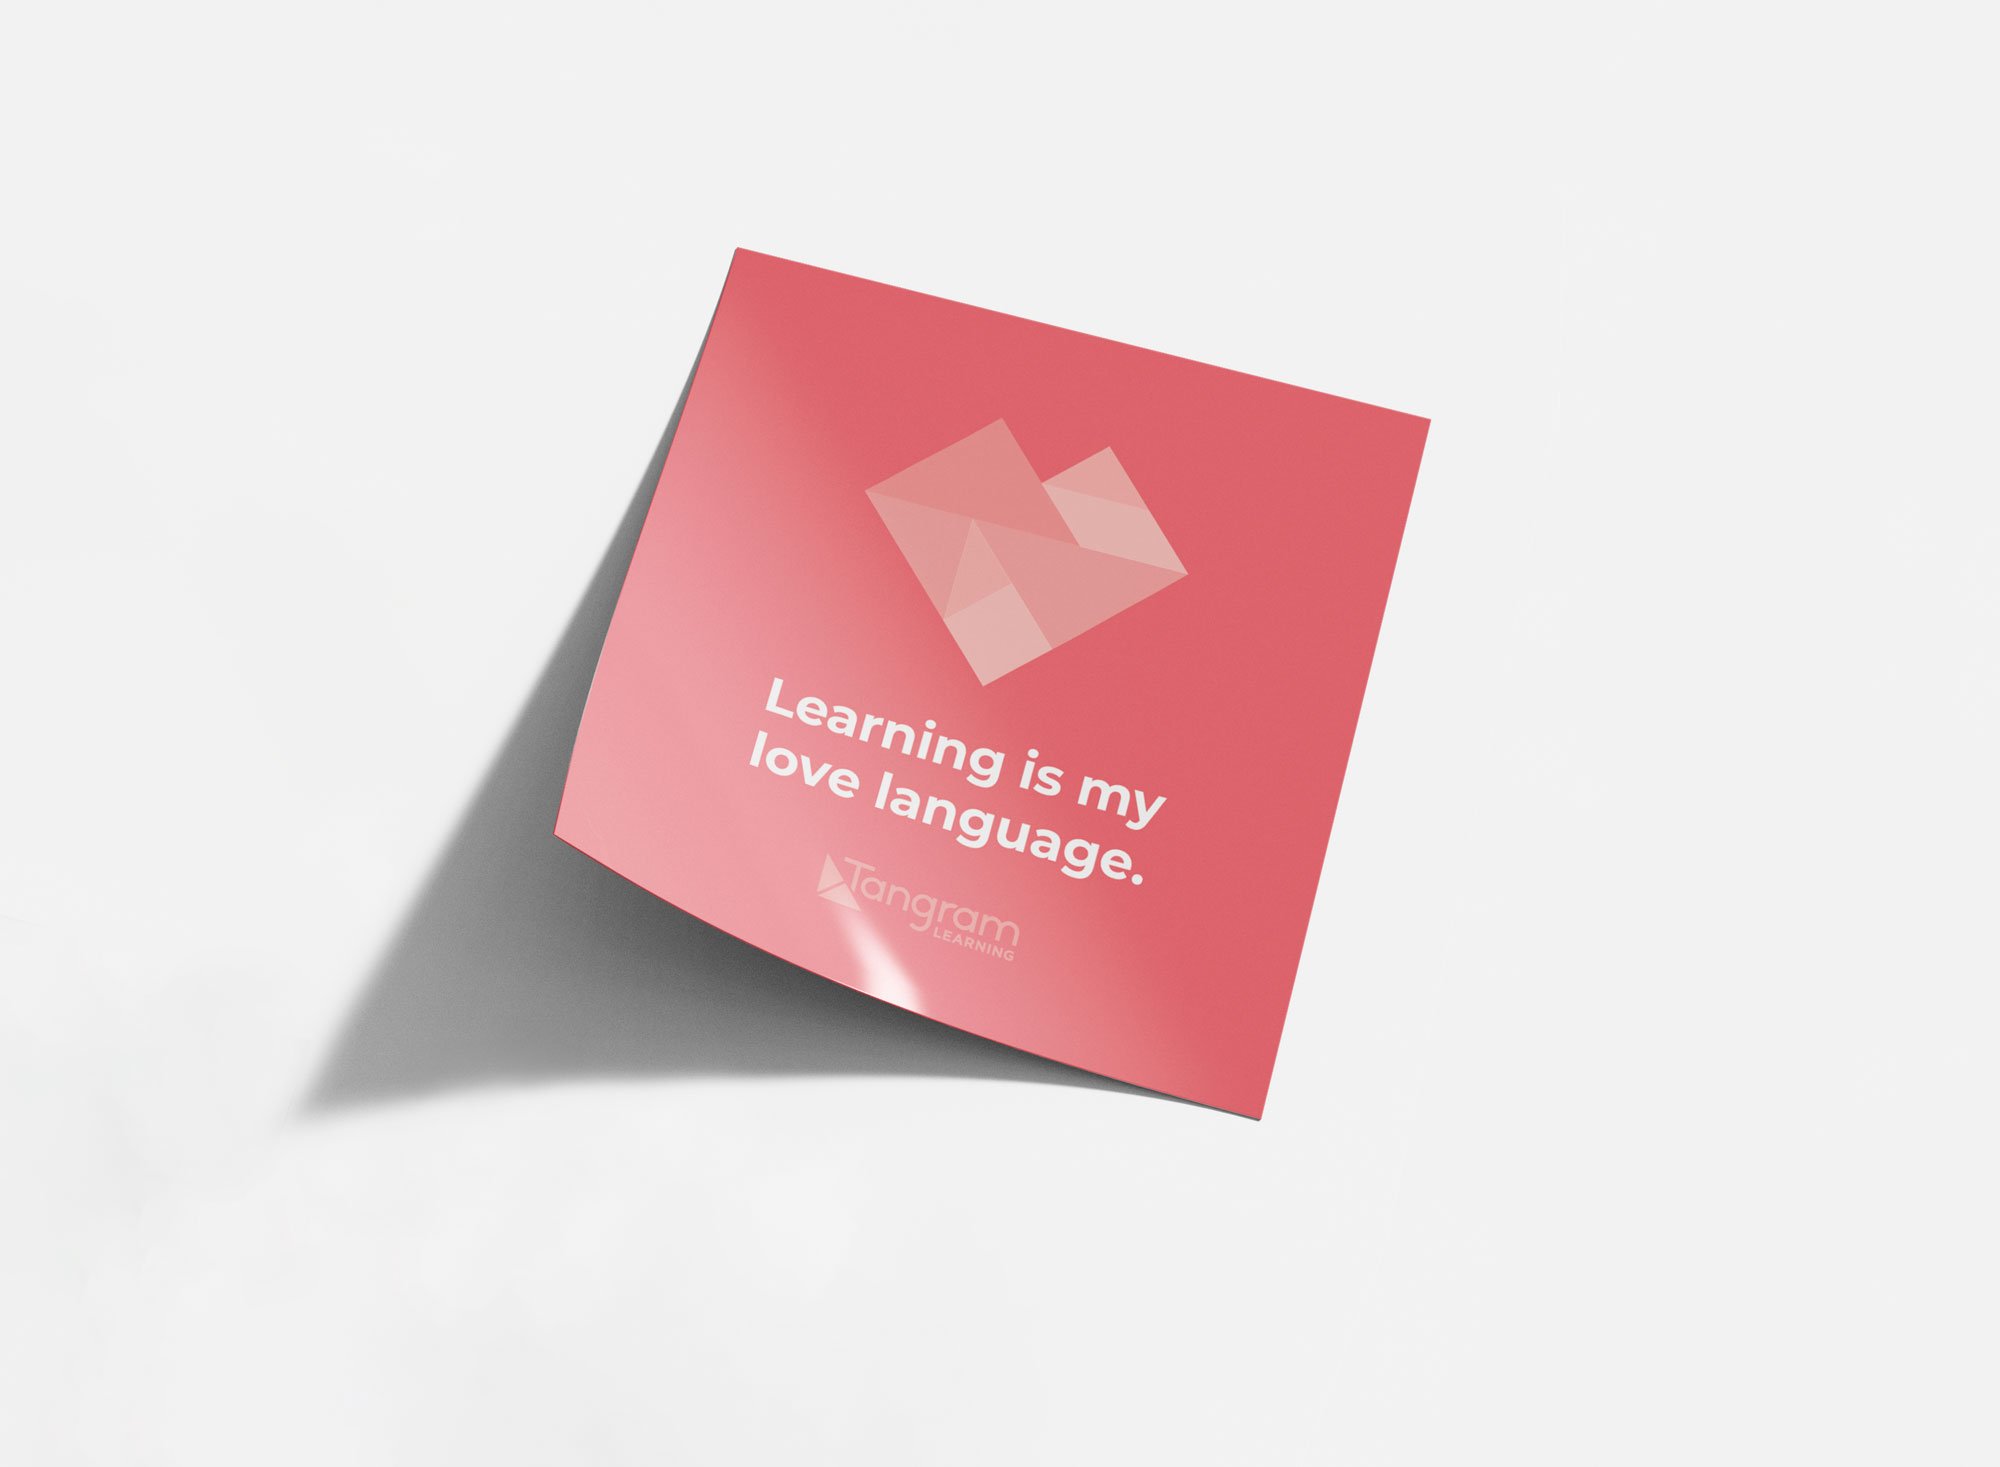 Learning-is-my-love-language-sticker.jpg